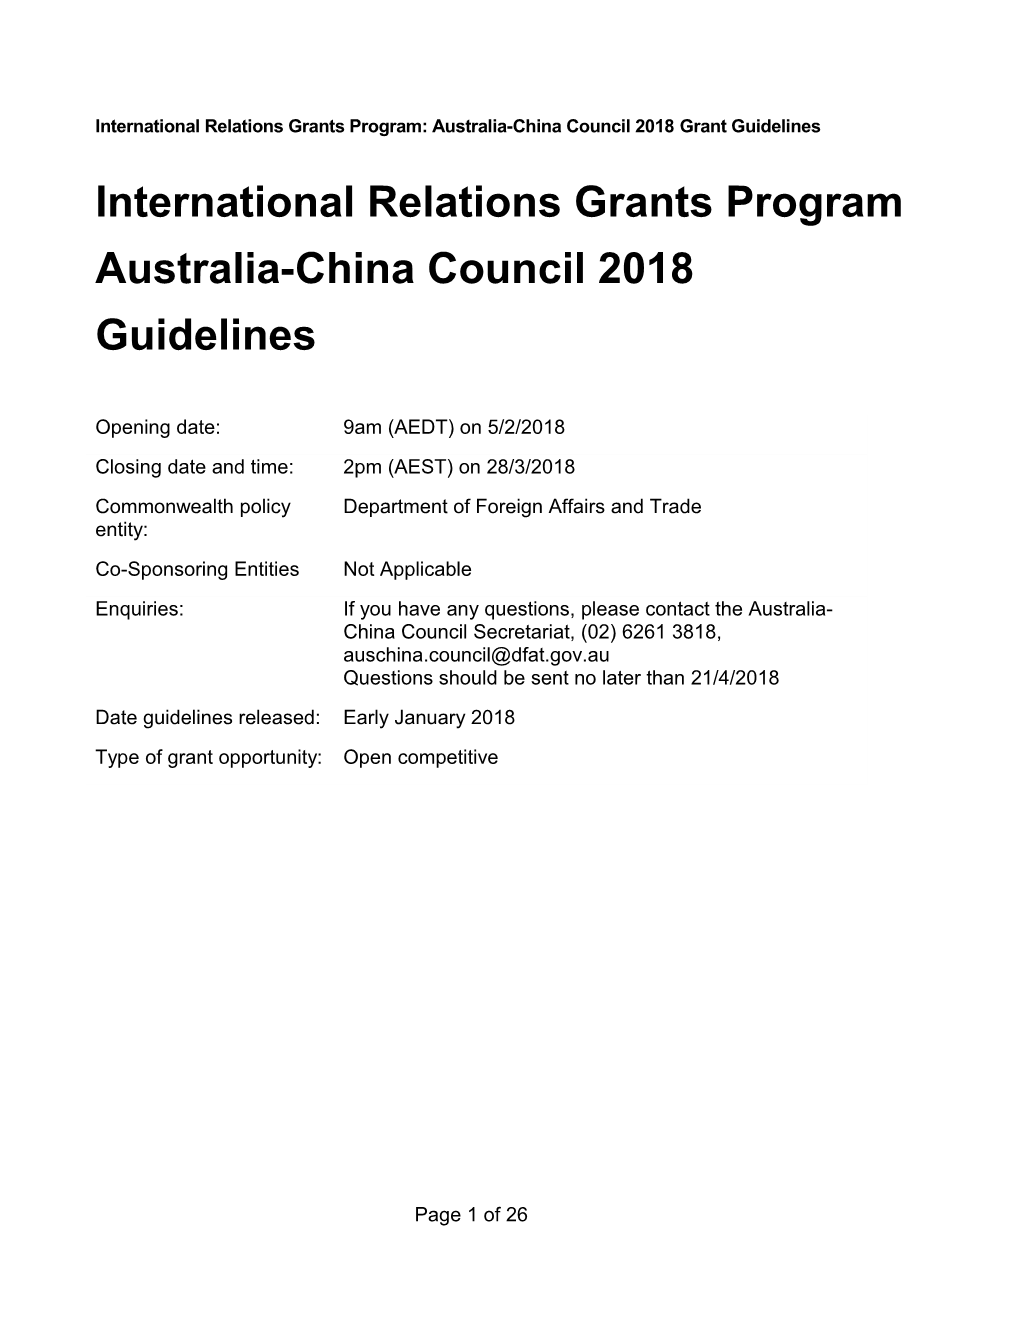 International Relations Grants Program: Australia-China Council 2018Grant Guidelines